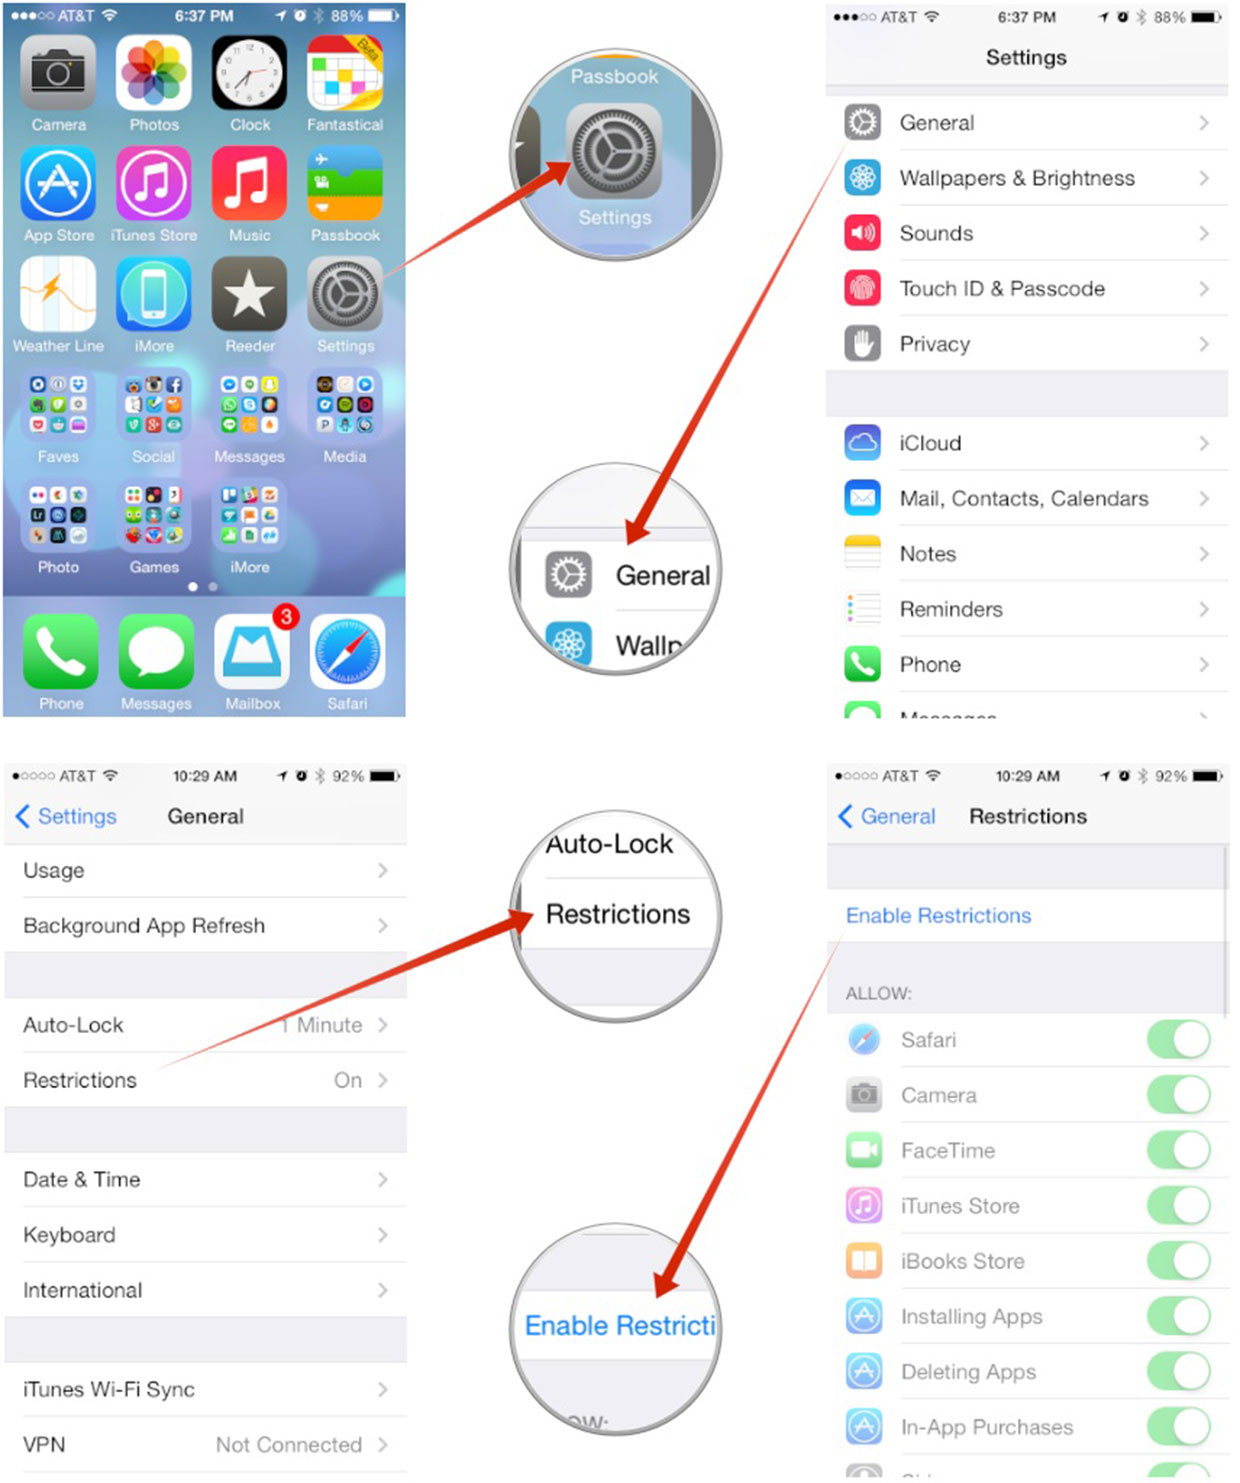 How to Delete Apps on iPad